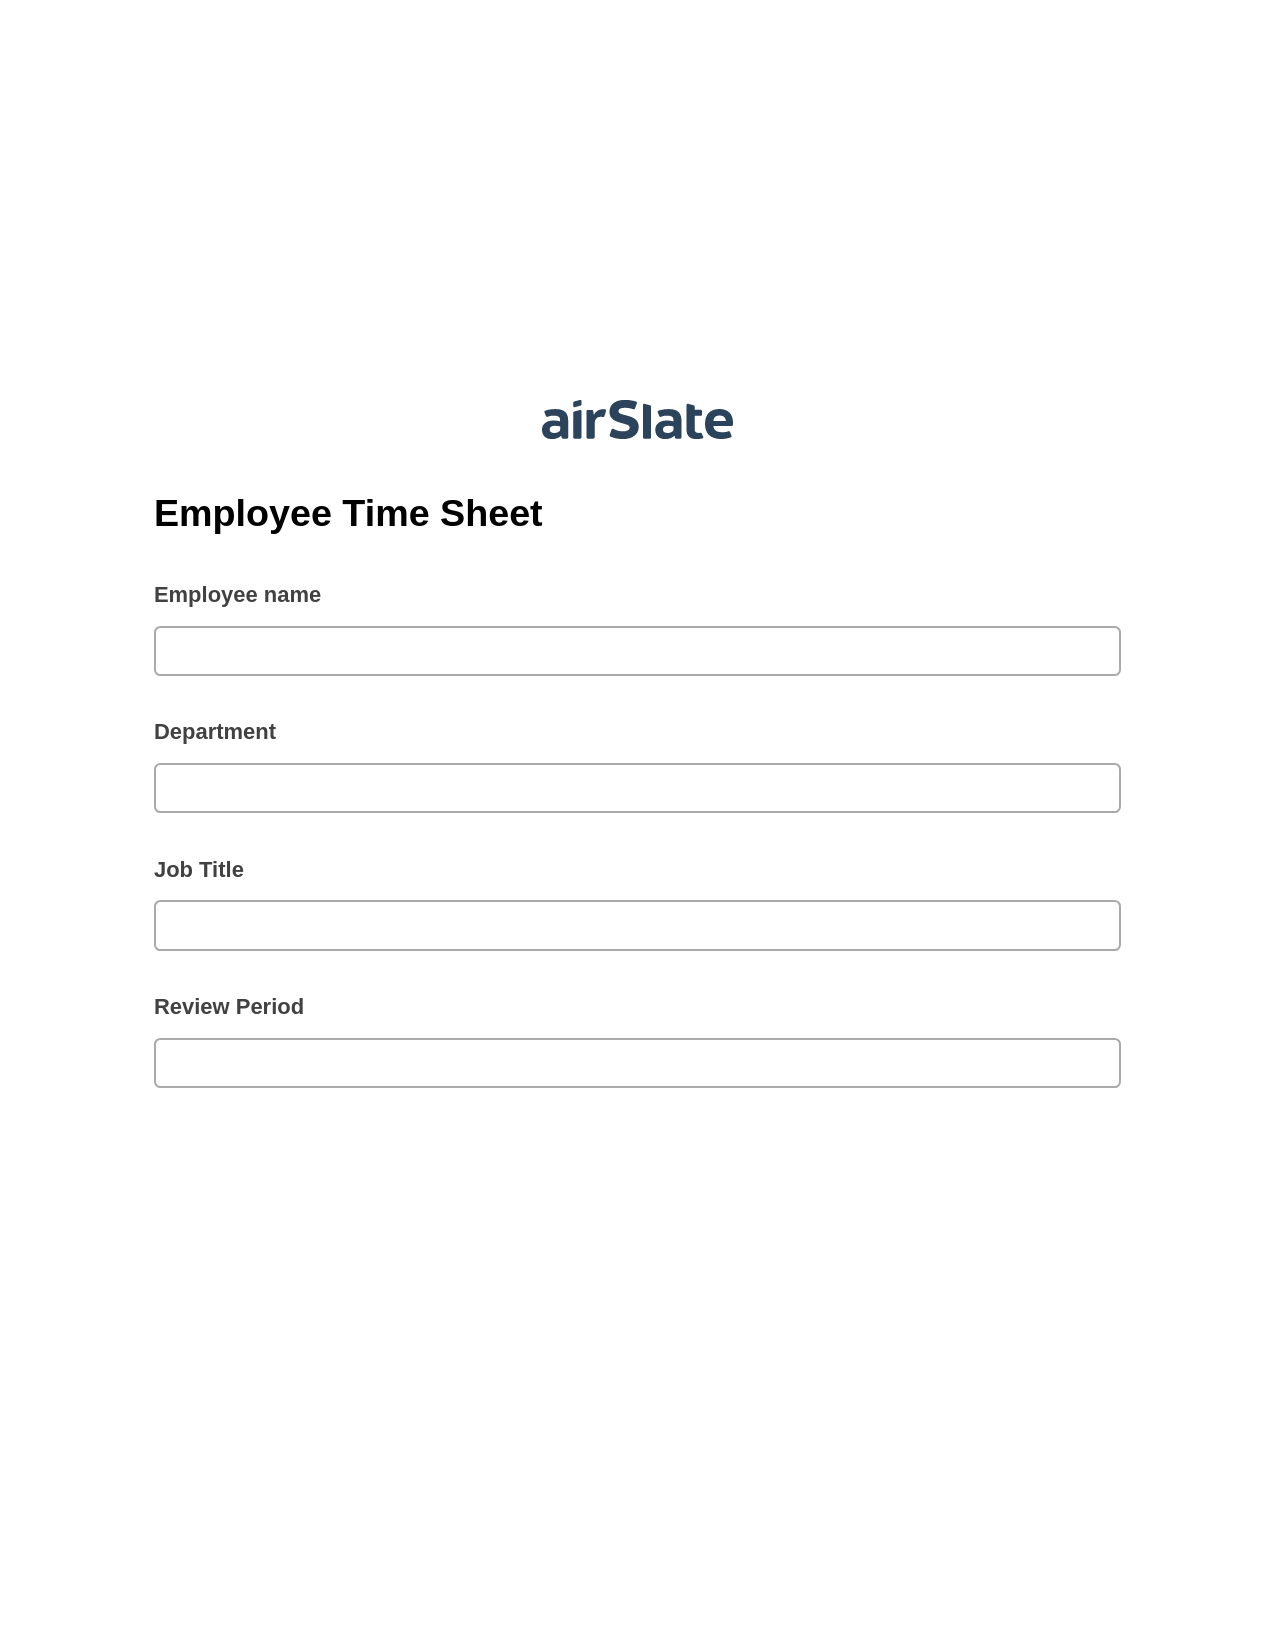 Multirole Employee Time Sheet Pre-fill Dropdowns from Google Sheet Bot, Create slate addon, Export to NetSuite Bot